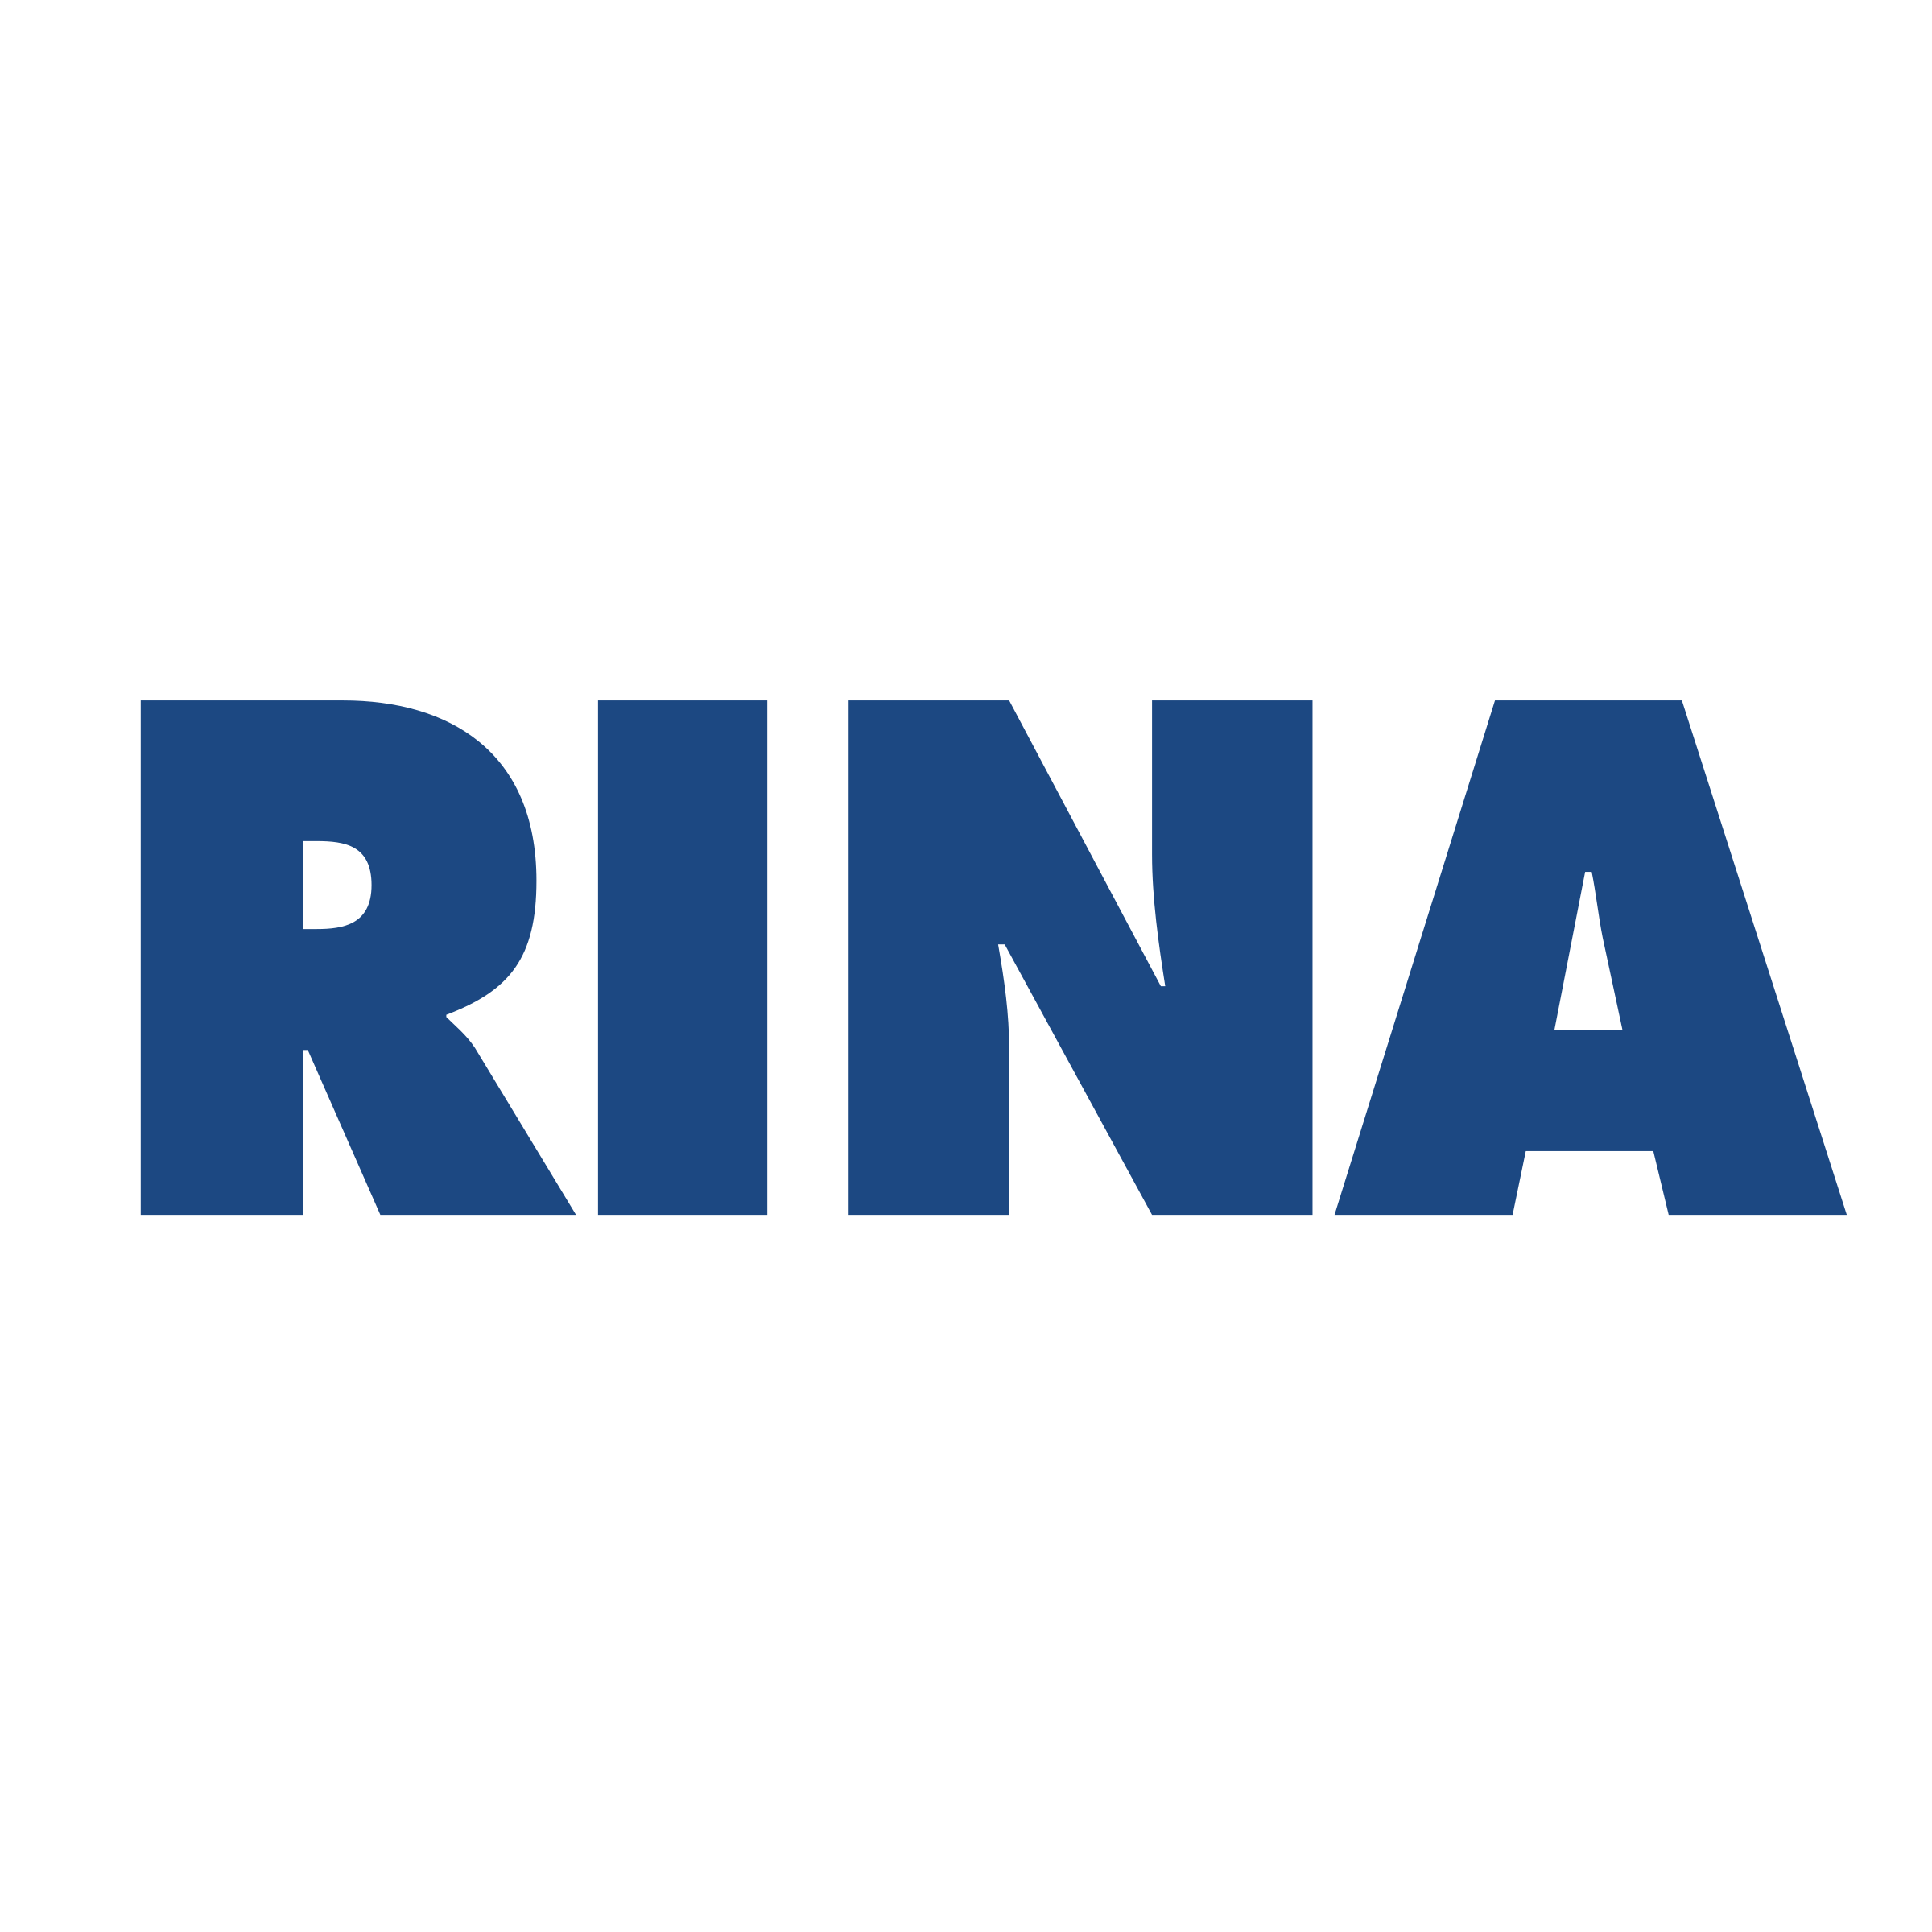 Rina Logo - RINA Logo PNG Transparent & SVG Vector - Freebie Supply